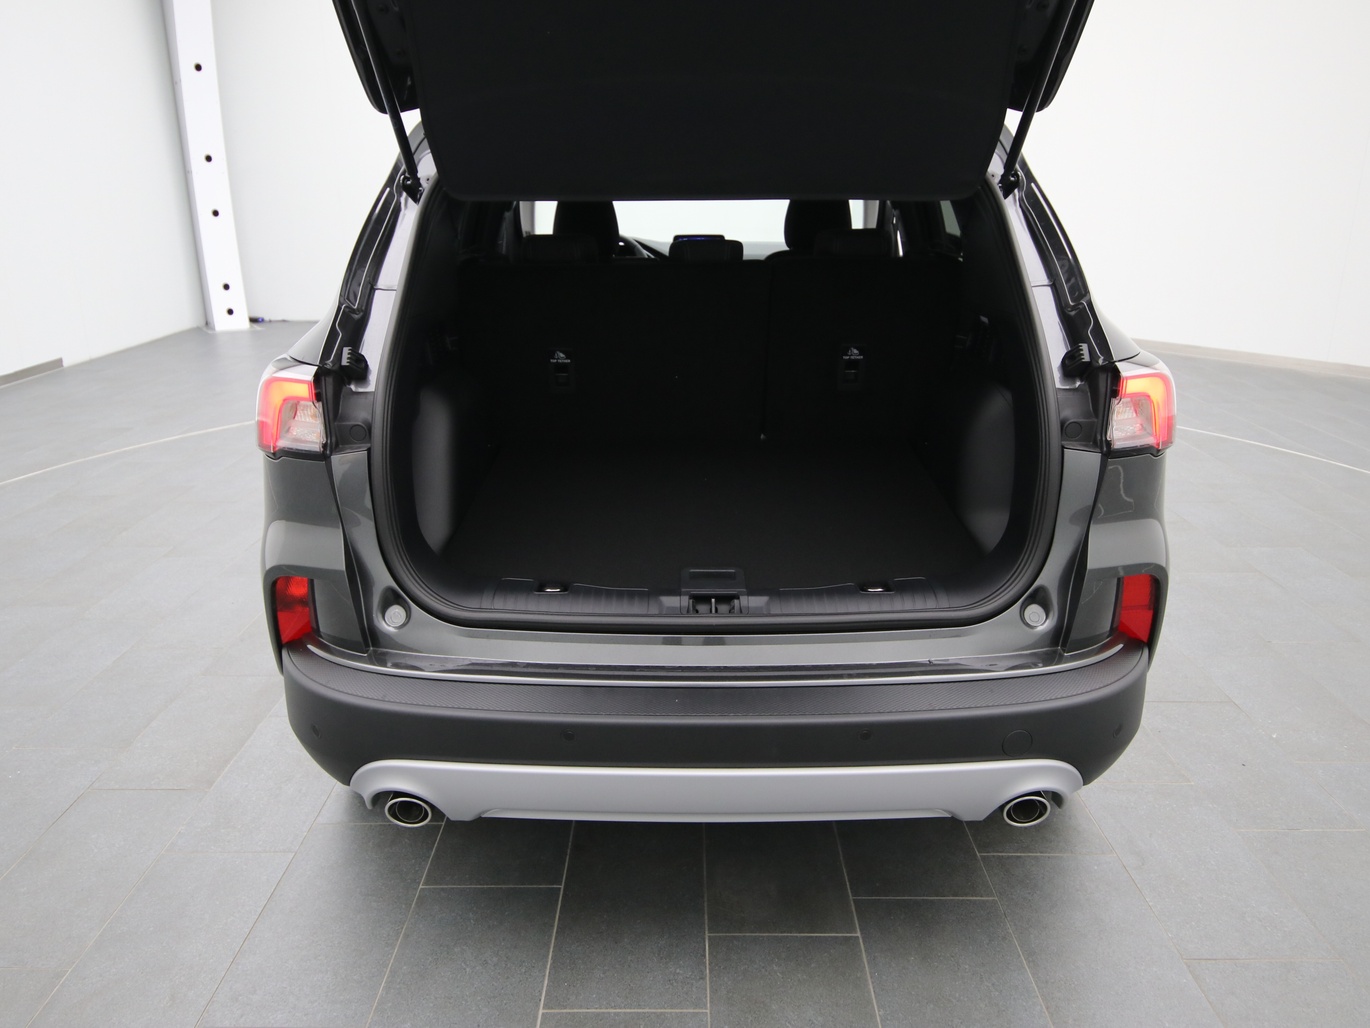  Ford Kuga Titanium 190PS Full-Hybrid Aut. 4x4 in Magnetic Grau 